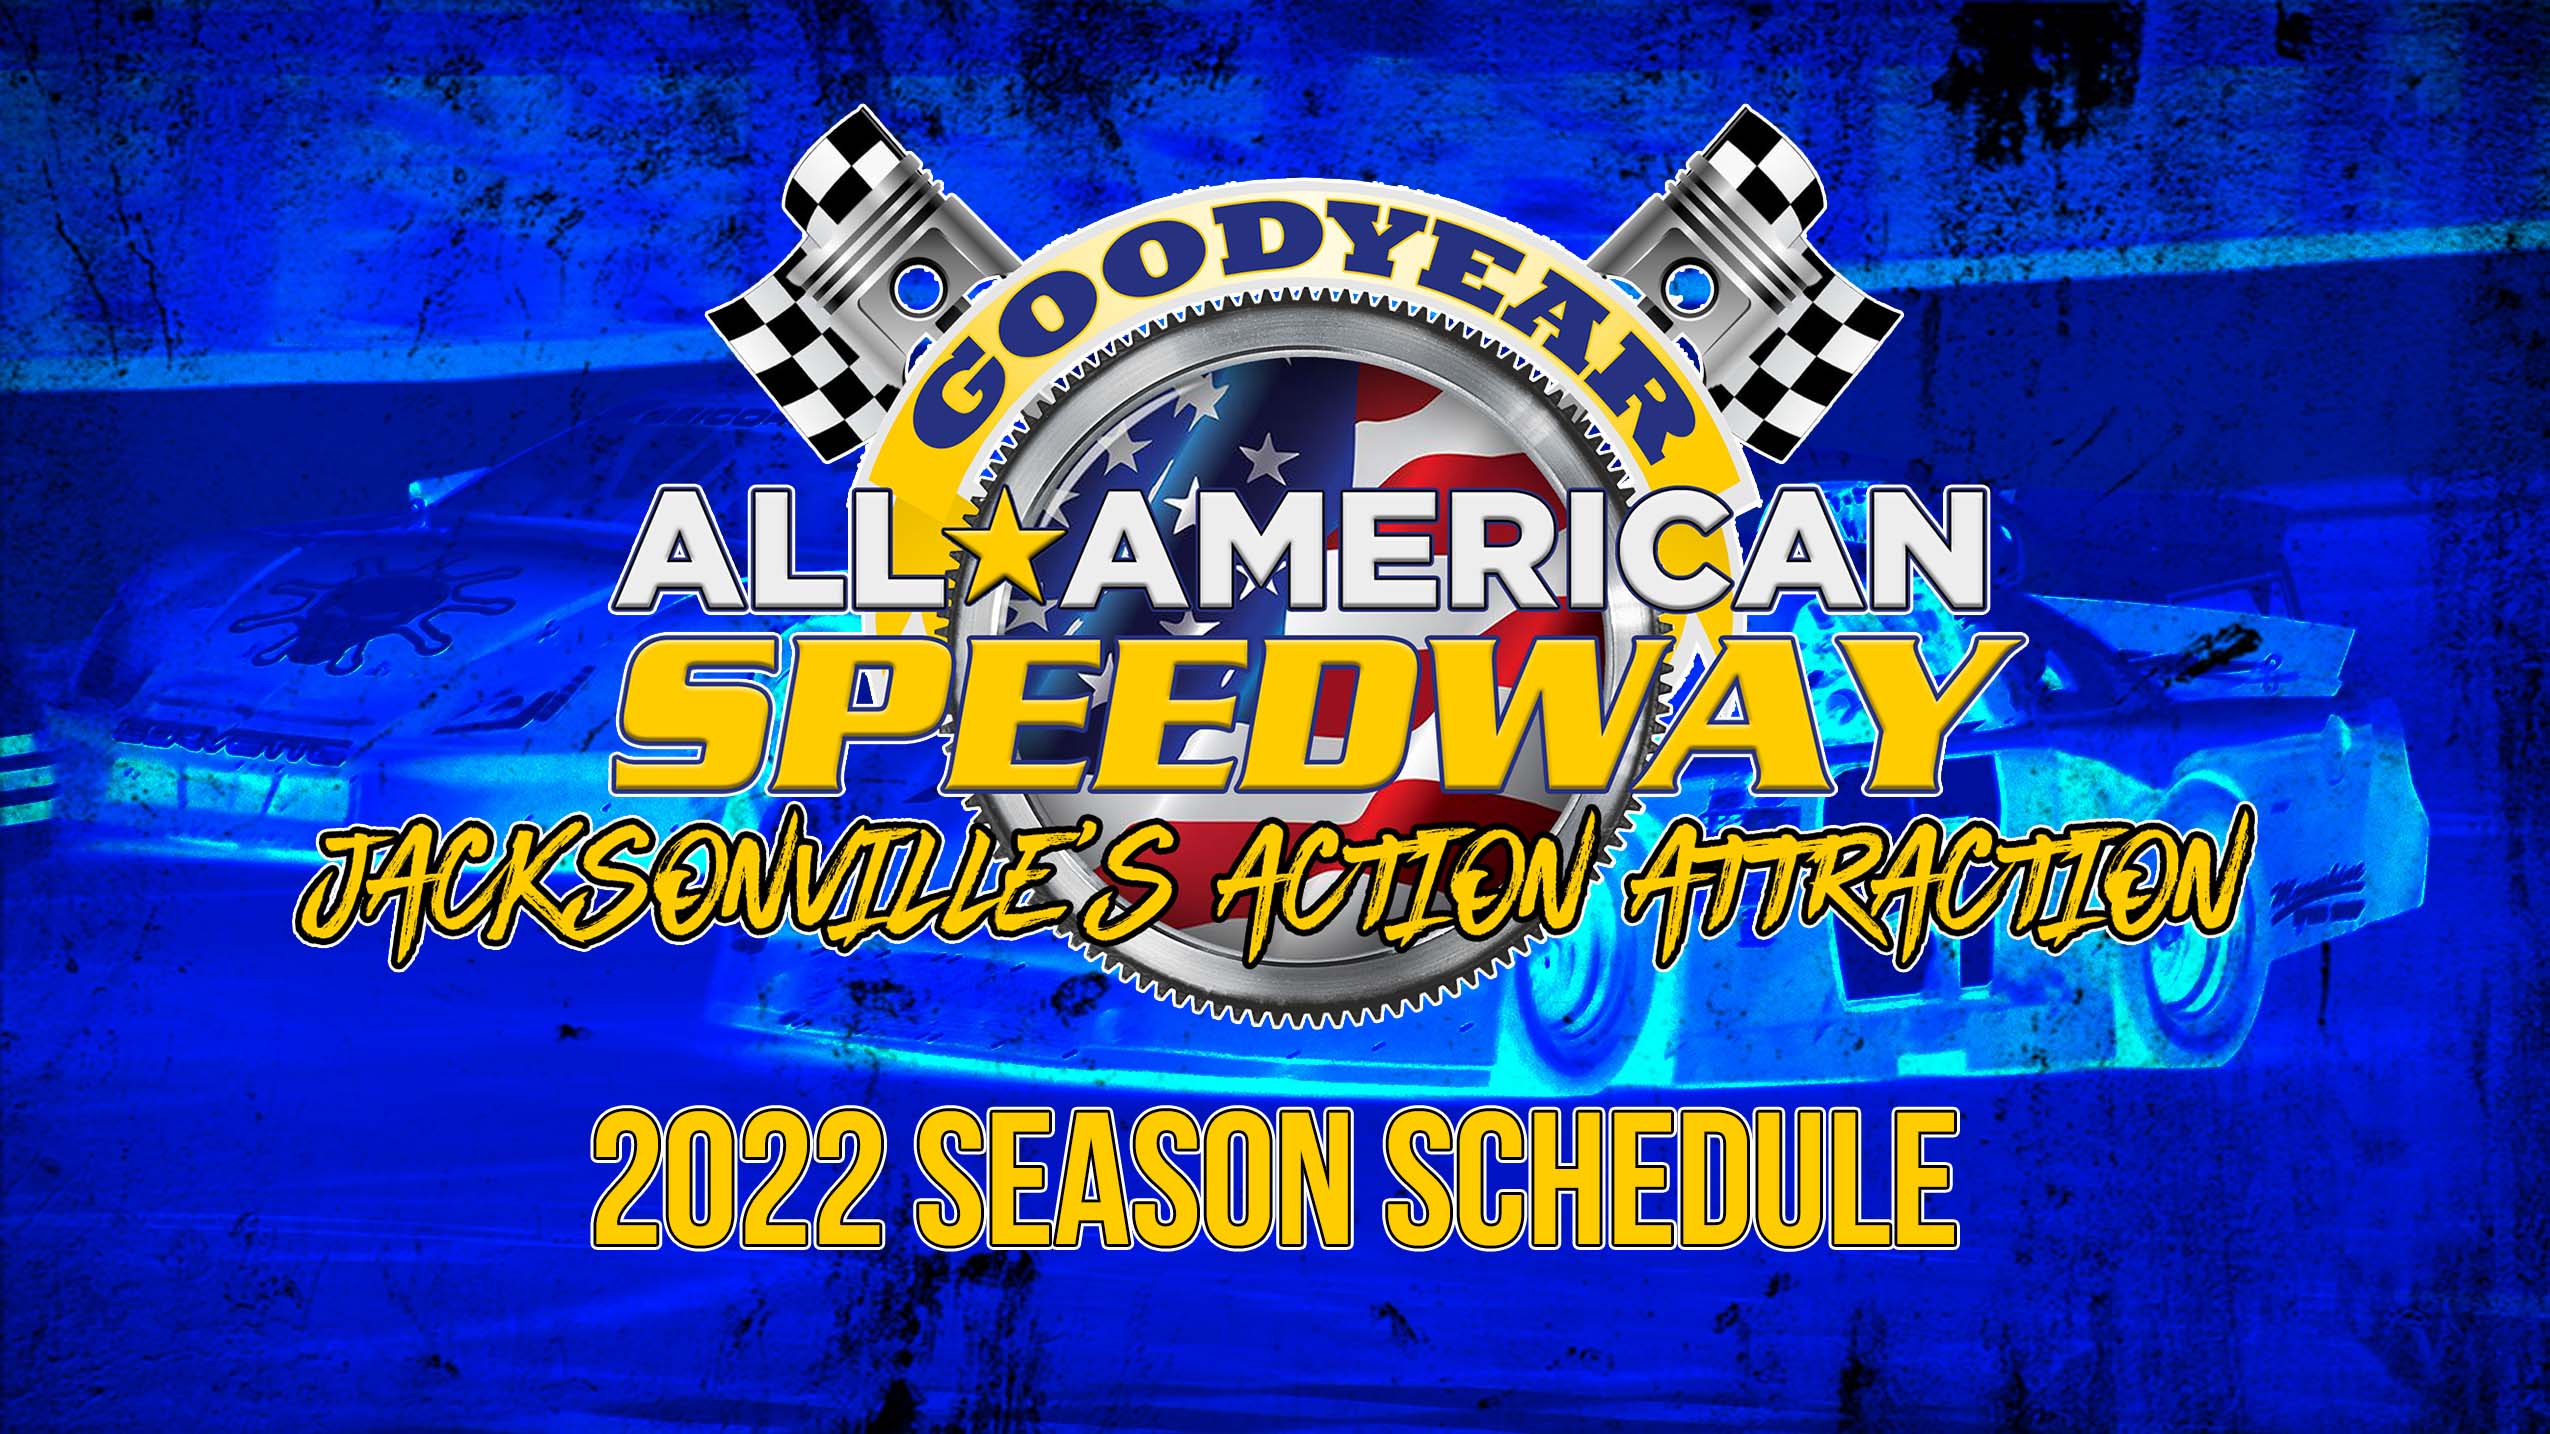 2022 Goodyear All American Speedway season schedule released New